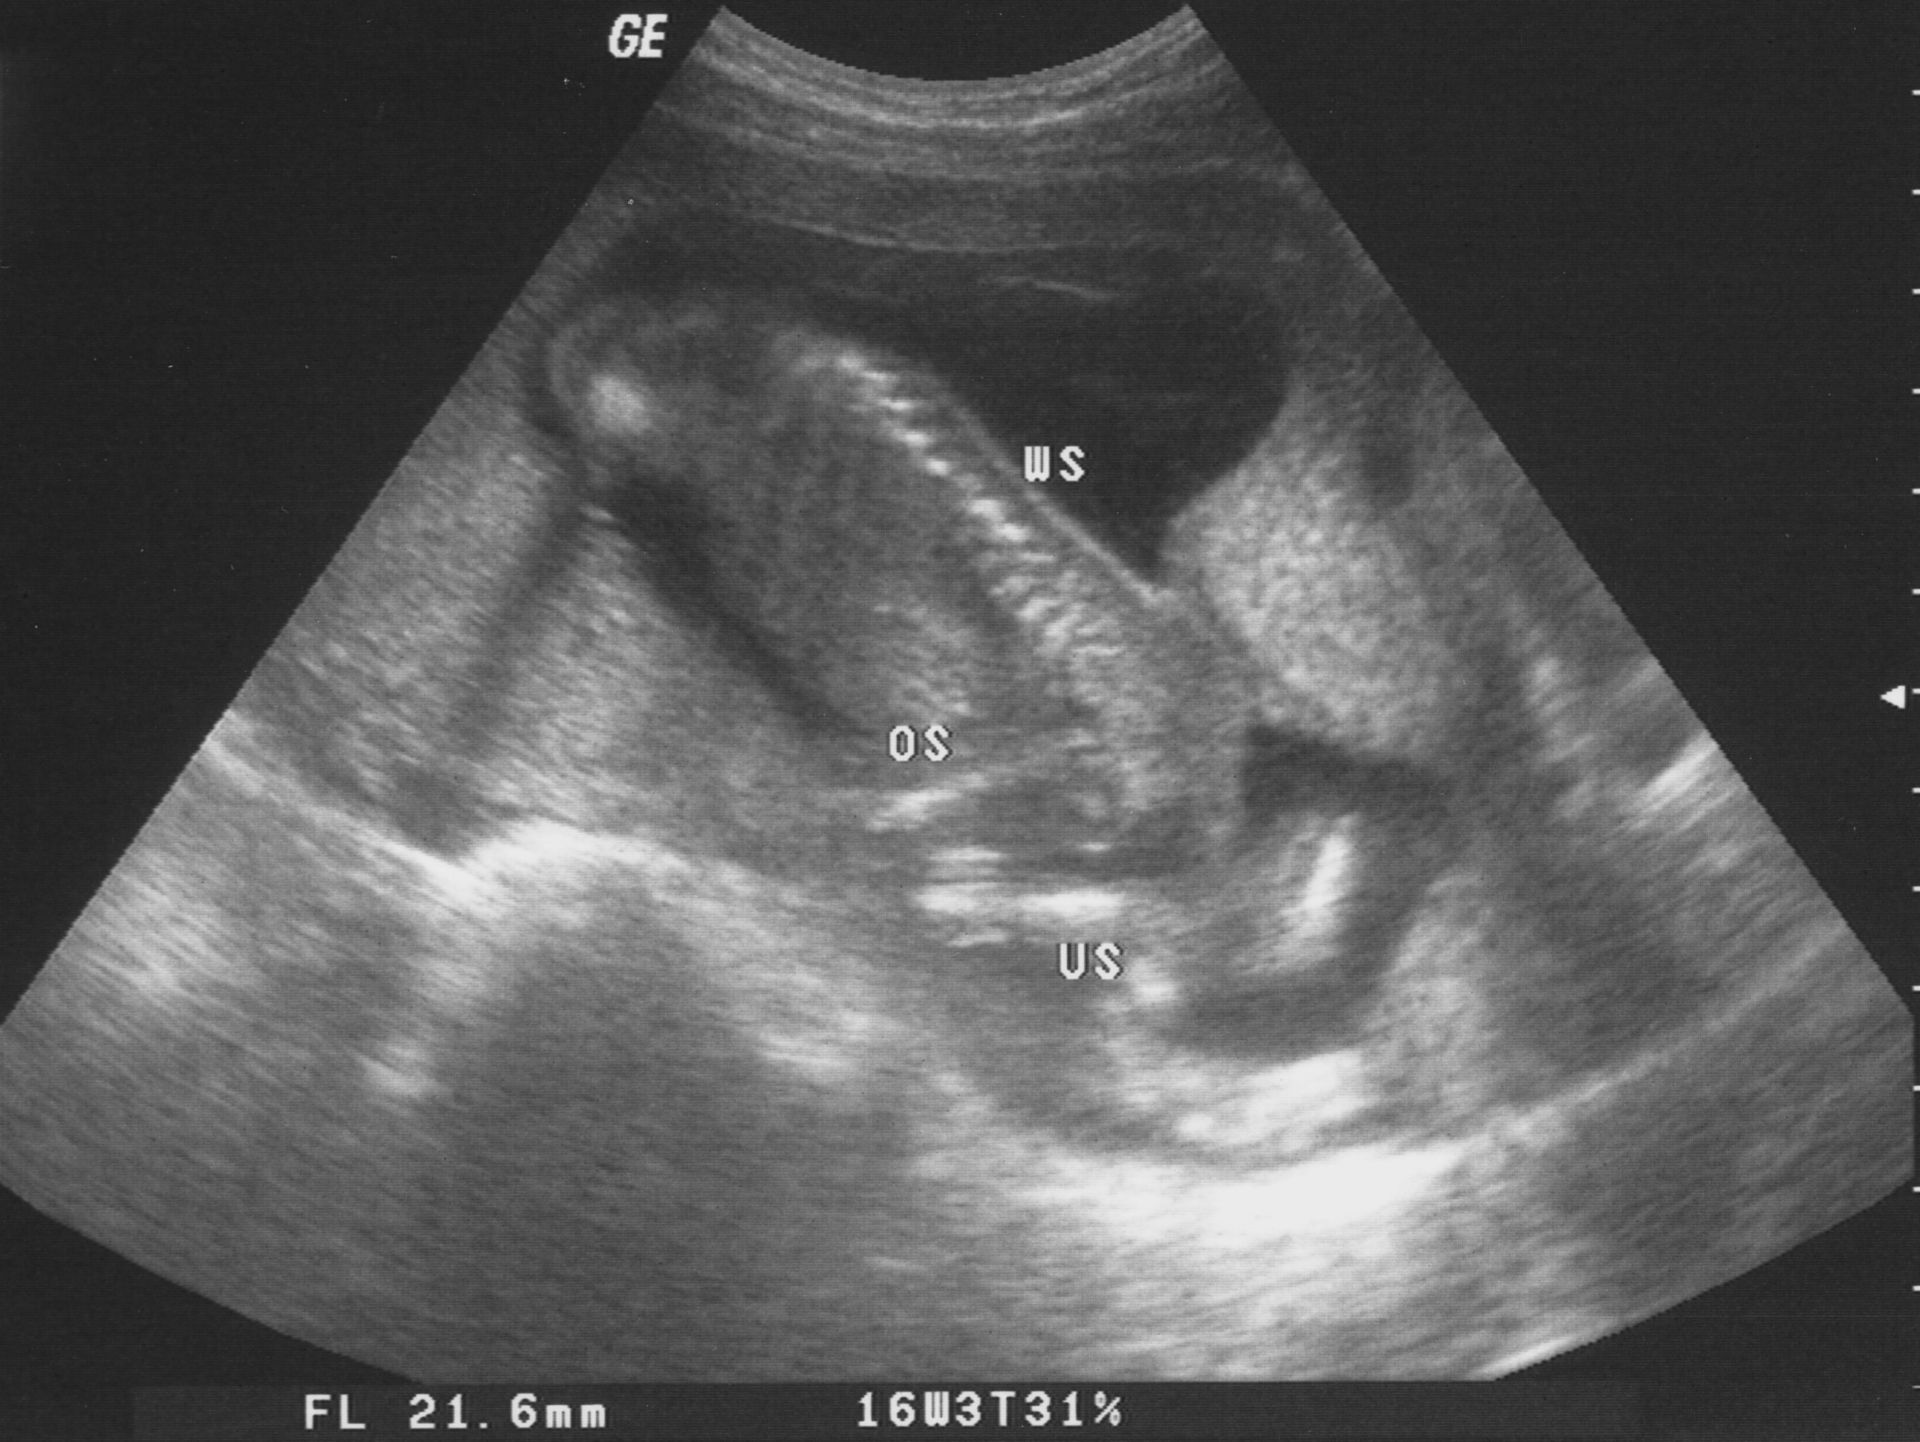 Ultrasound - 18 weeks pregnant